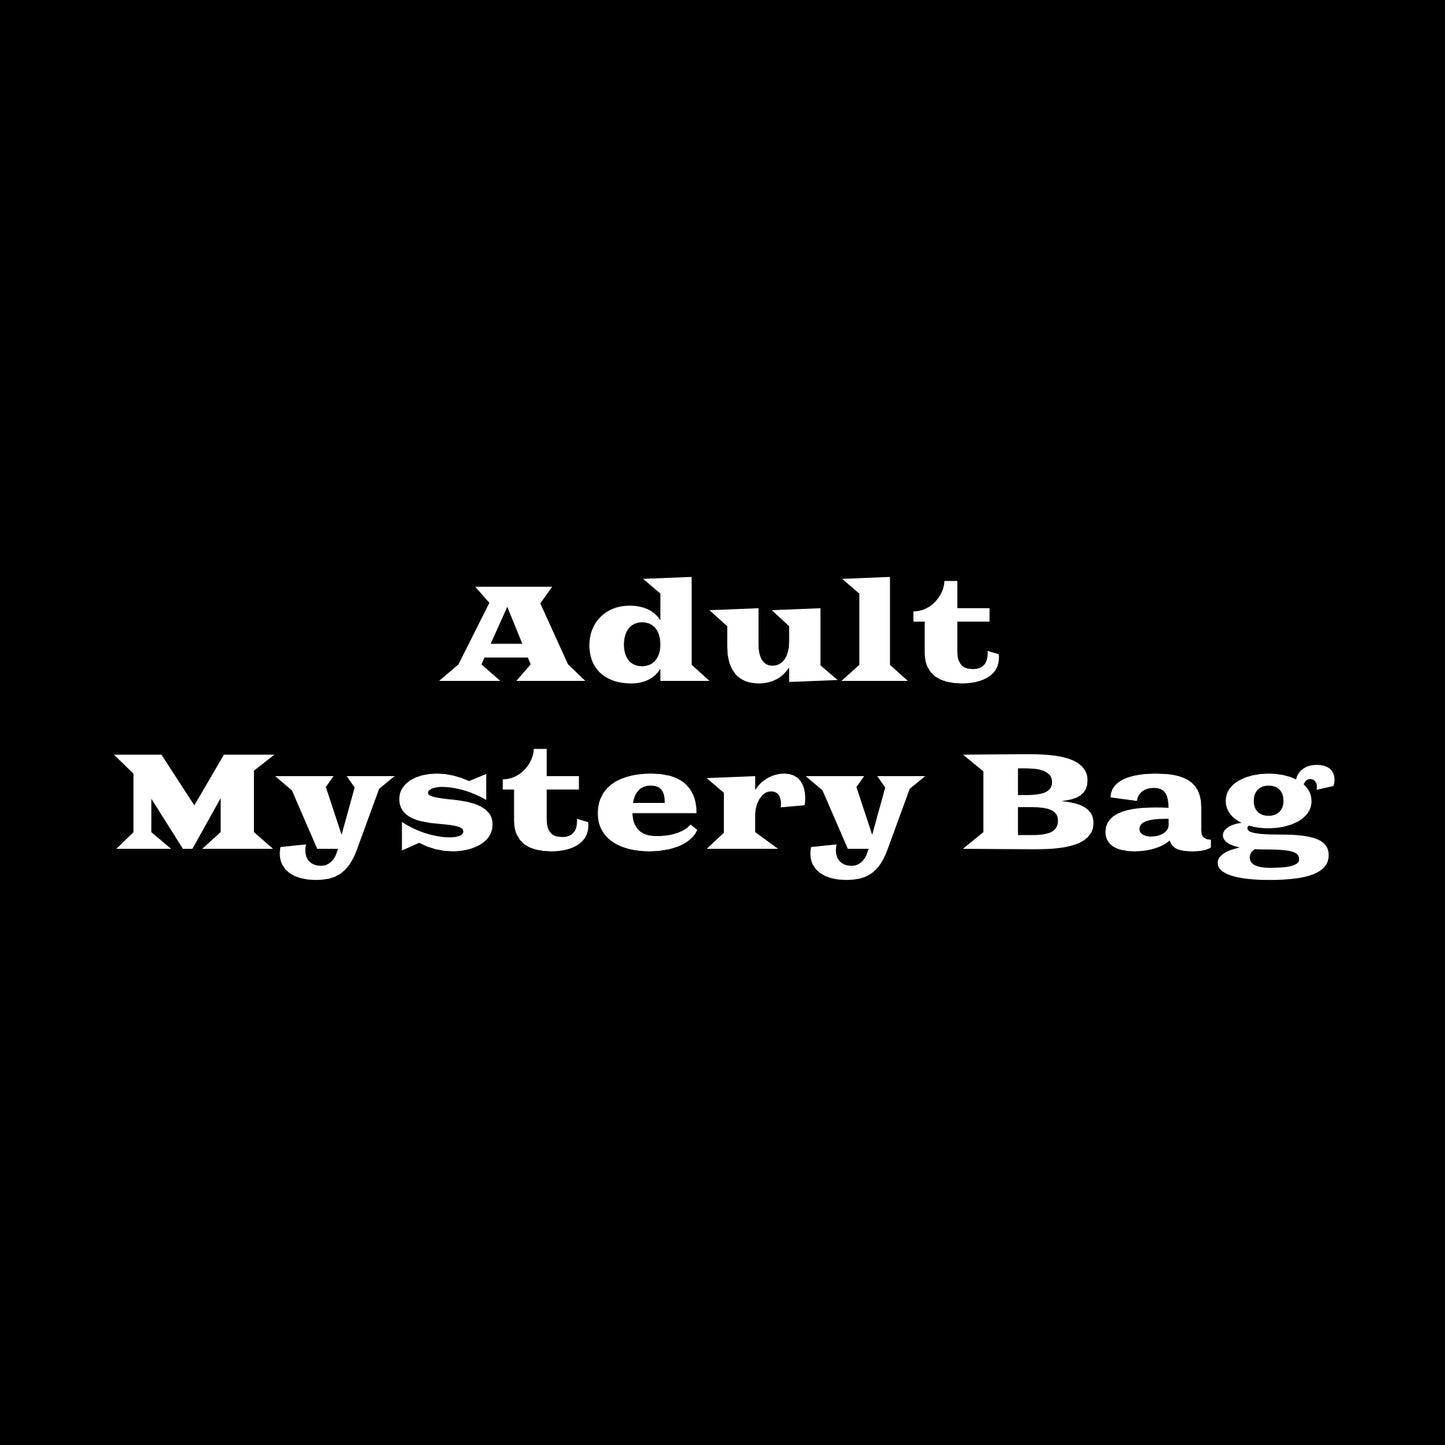 Adult mystery Bag